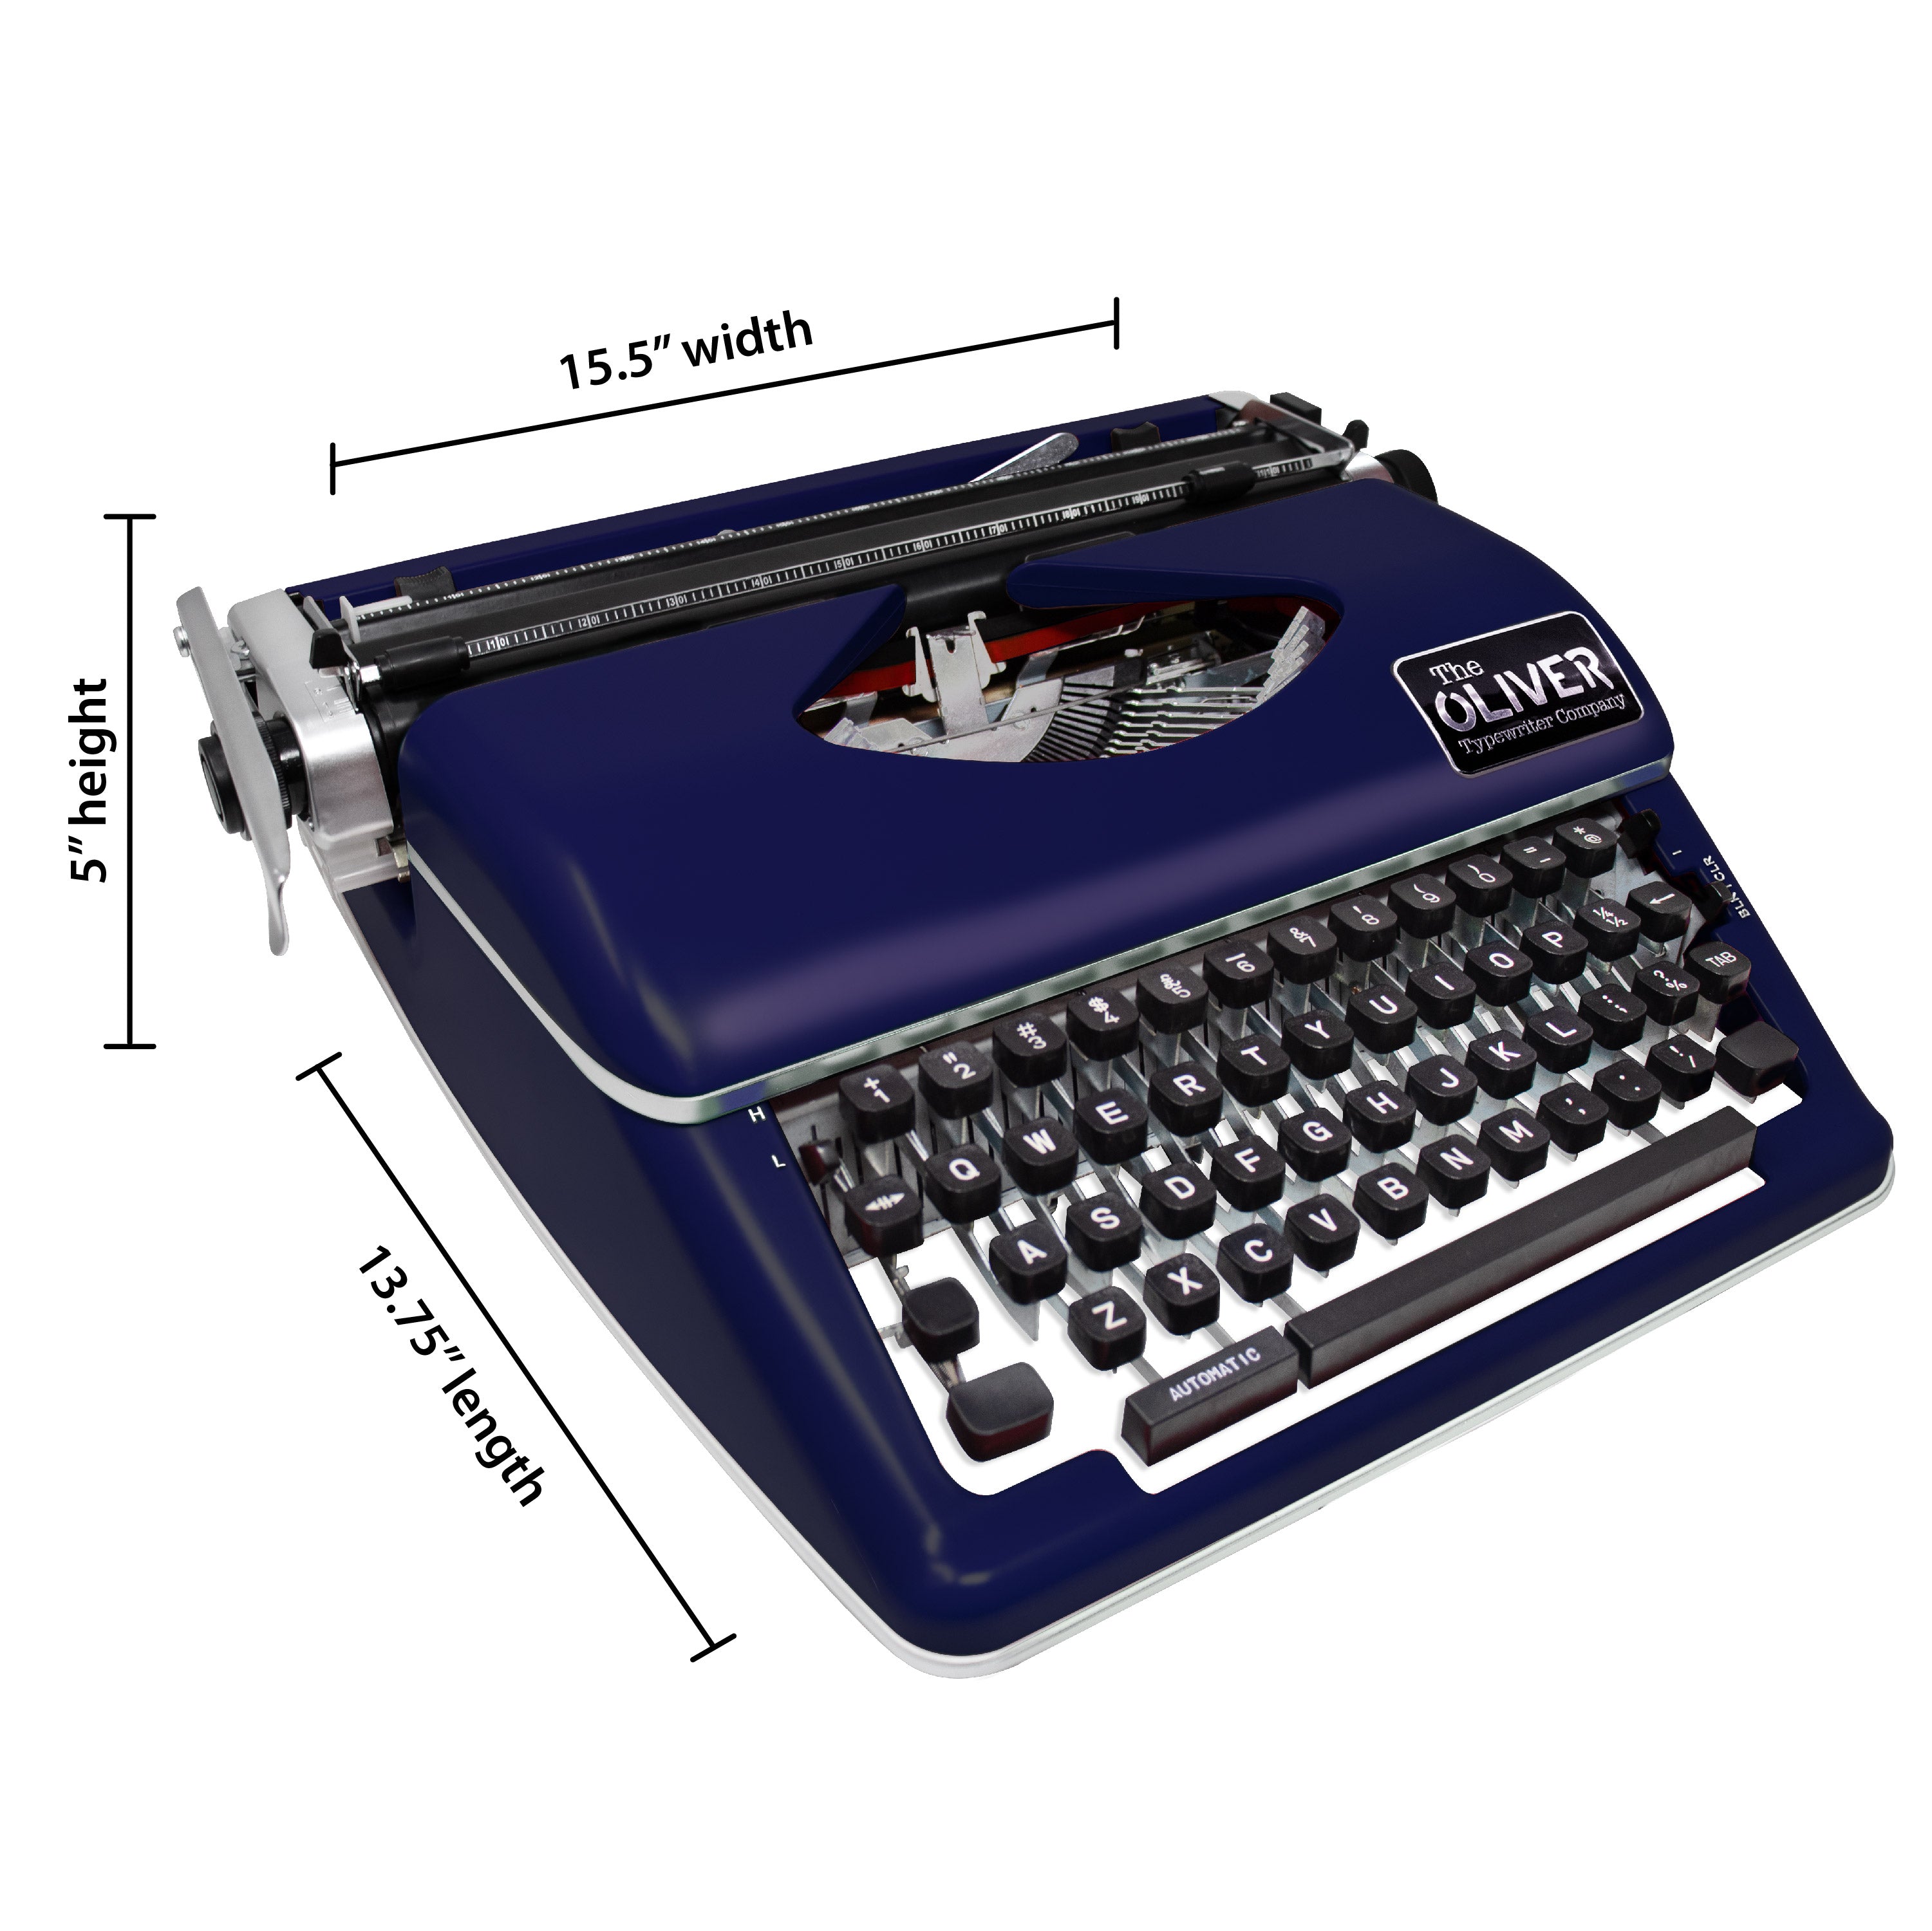 The Oliver Typewriter Company Legacy Manual Typewriter